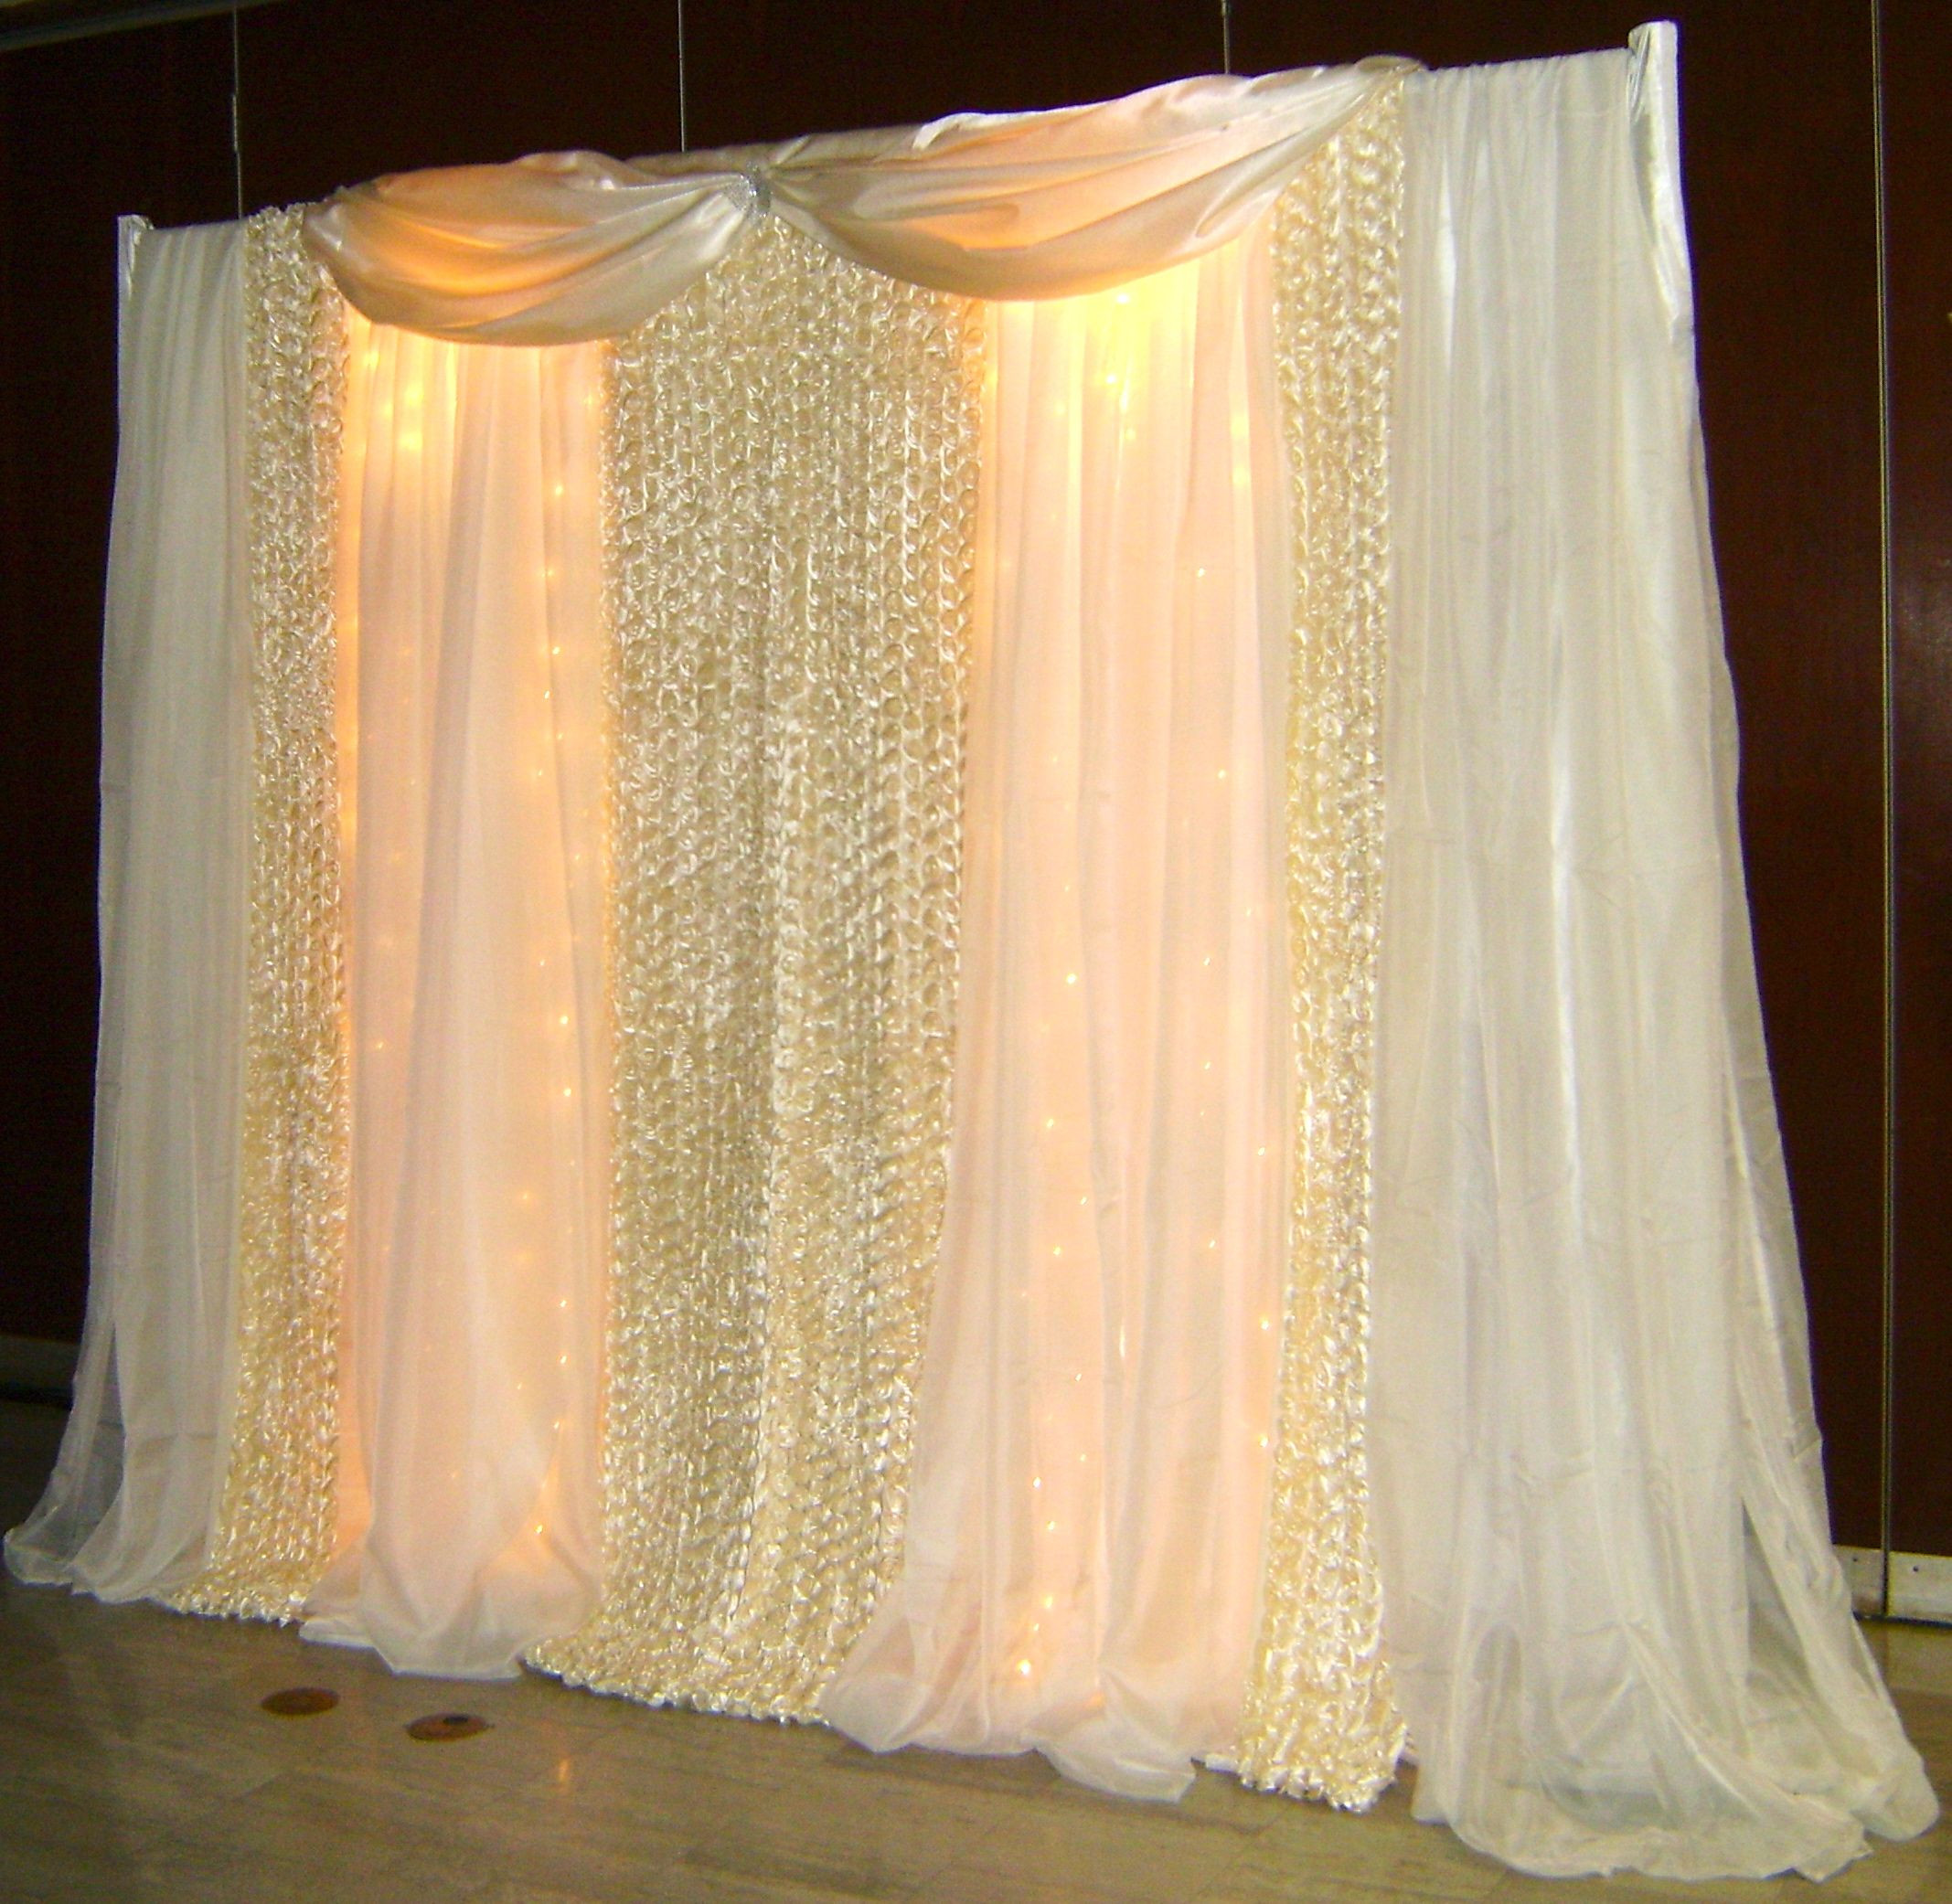 DIY Backdrop For Wedding
 DIY Wedding Backdrops Ideas